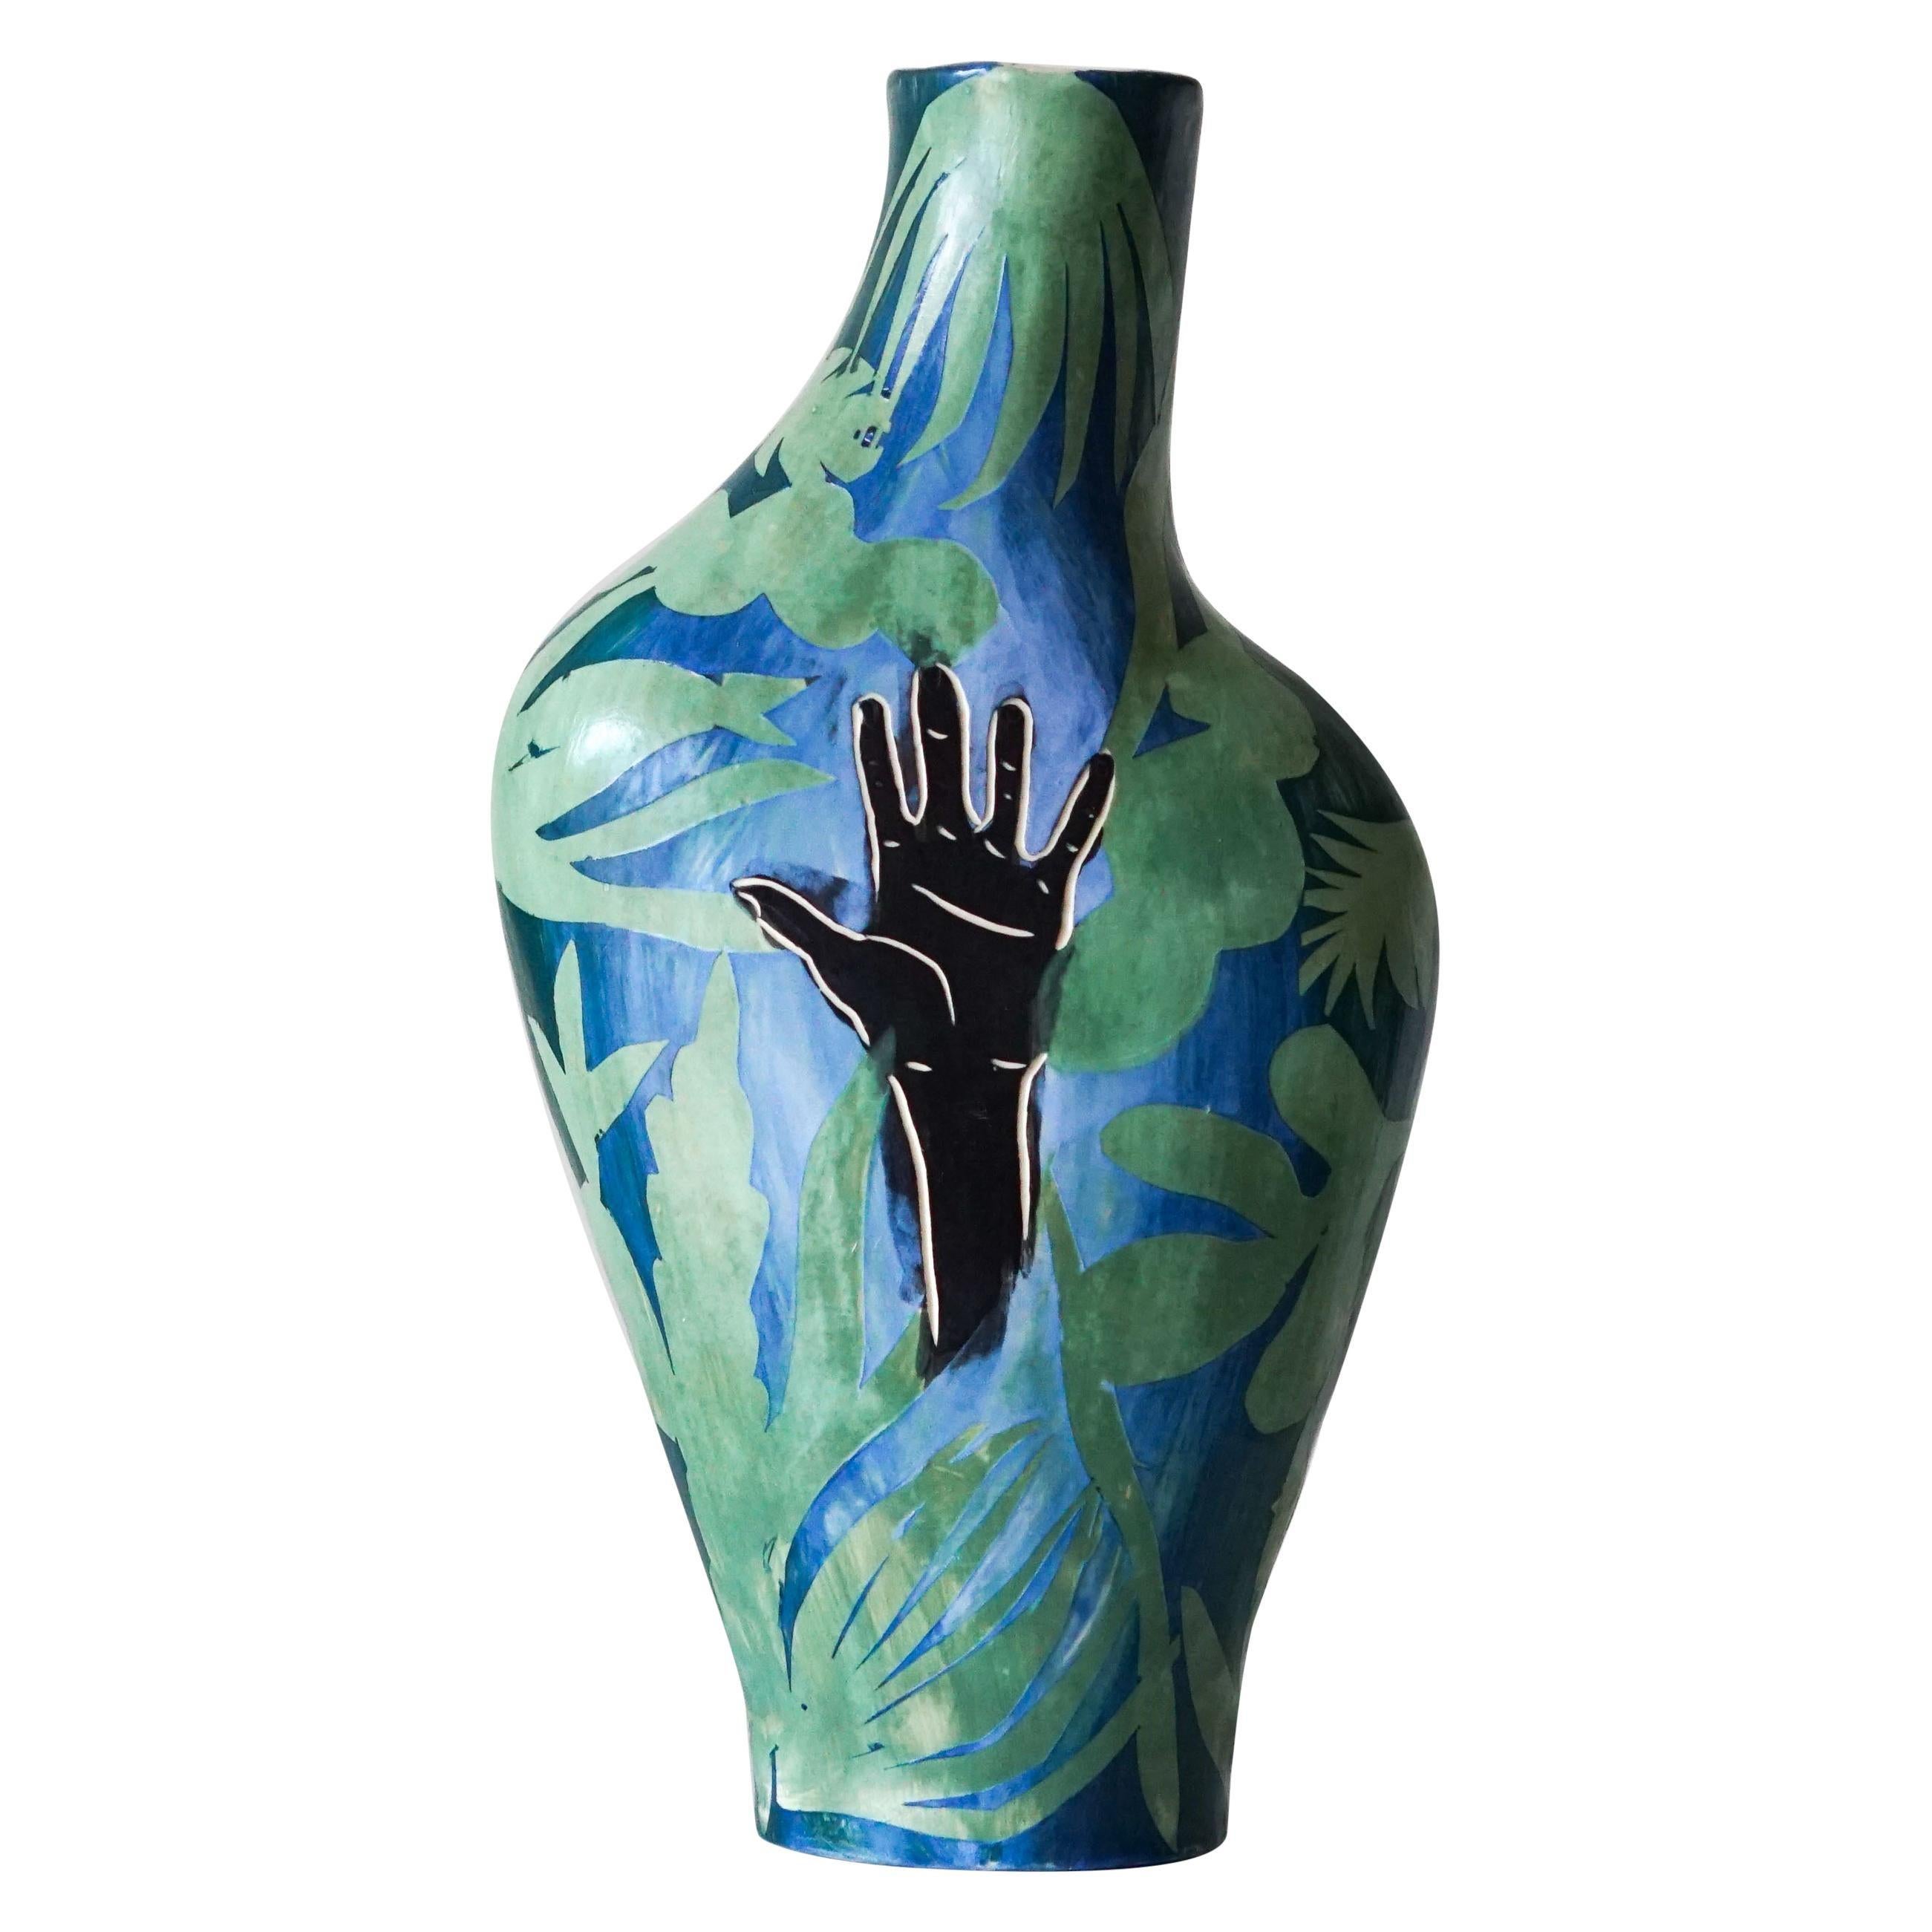 Alex Hodge Abstract Sculpture - Helping Hand, Ceramic Vase sculpture